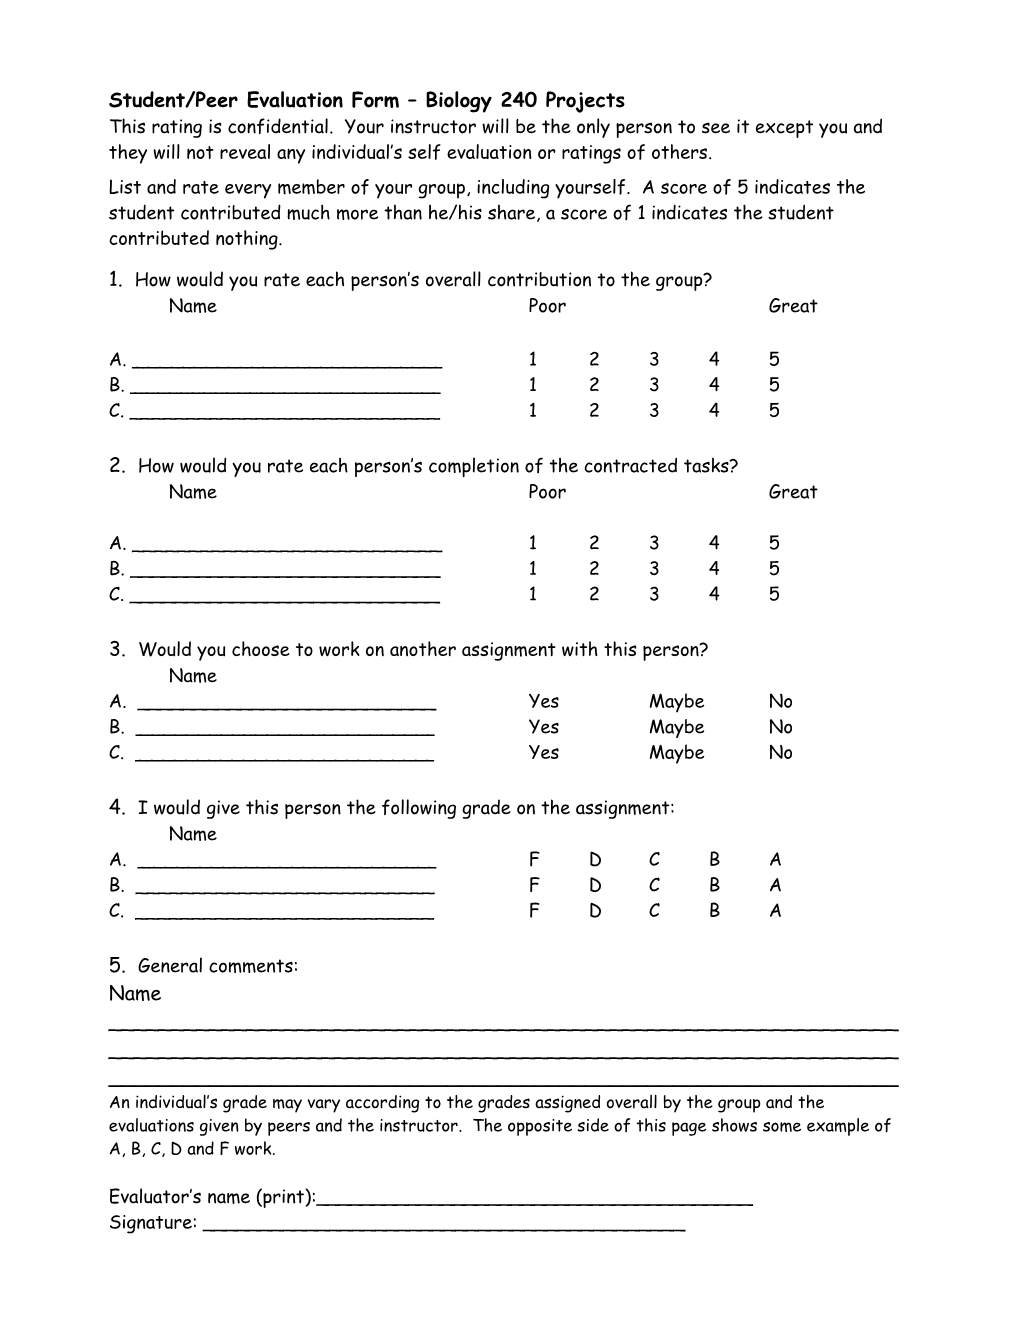 Student/Peer Evaluation Form